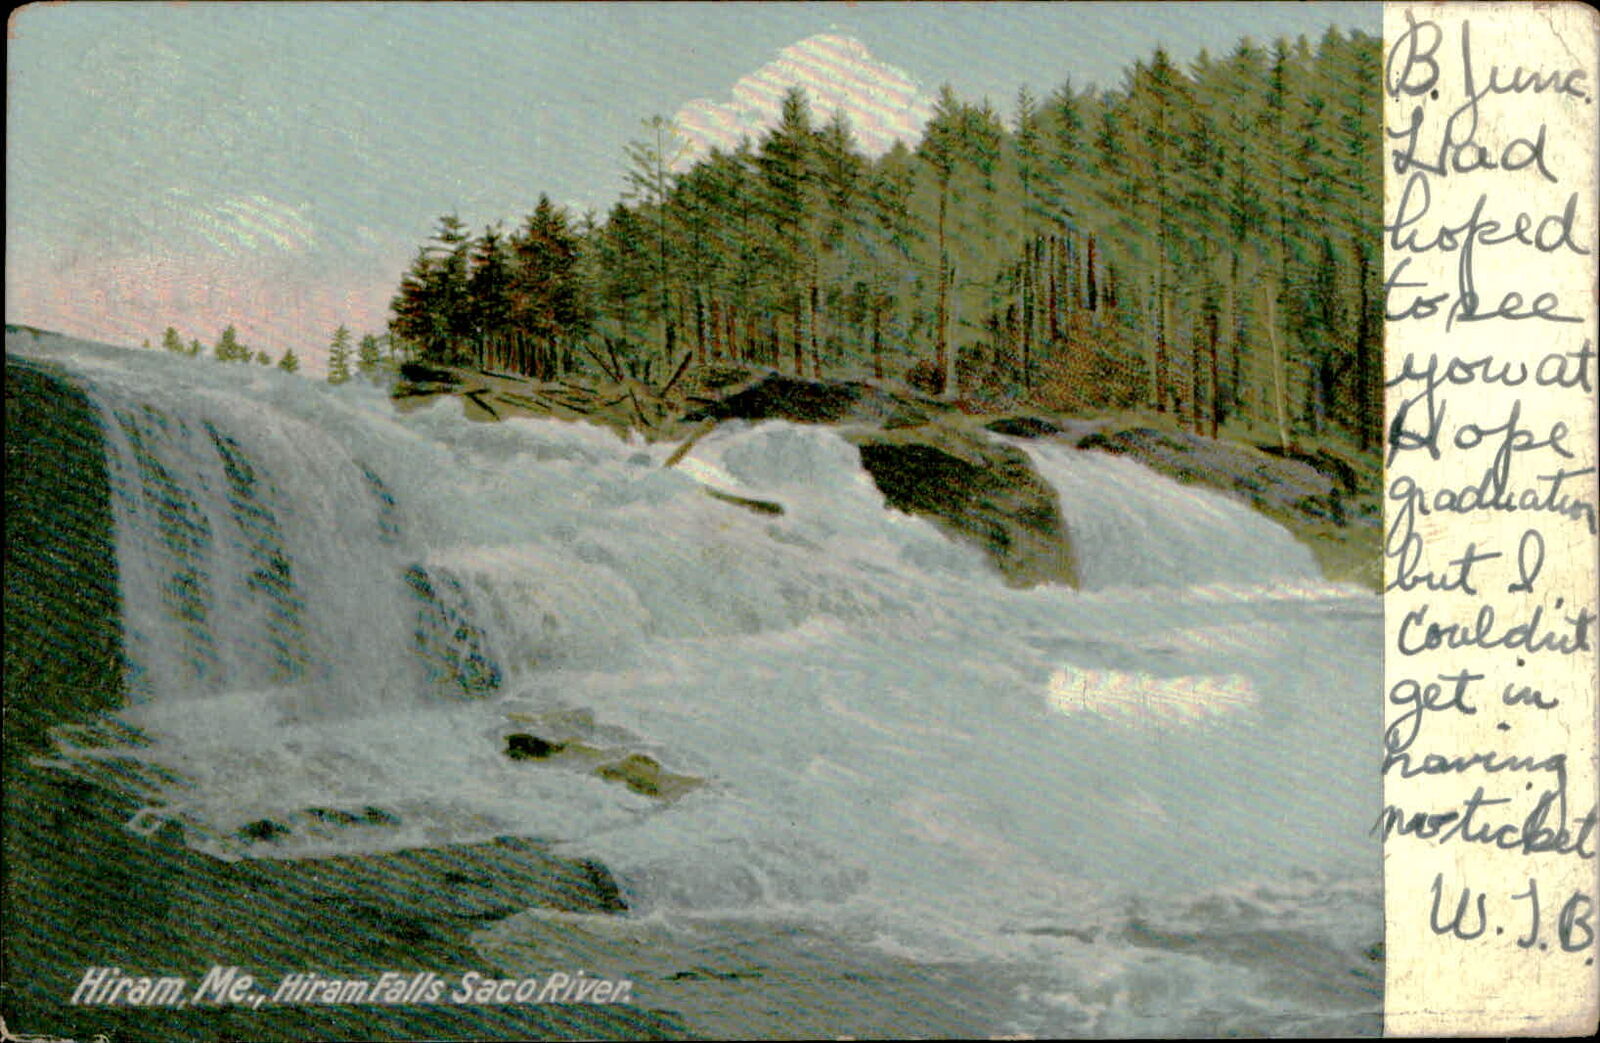 Postcard: Hiram, Me., Hiram Falls Saco River B. Junc Lad hoped topee y